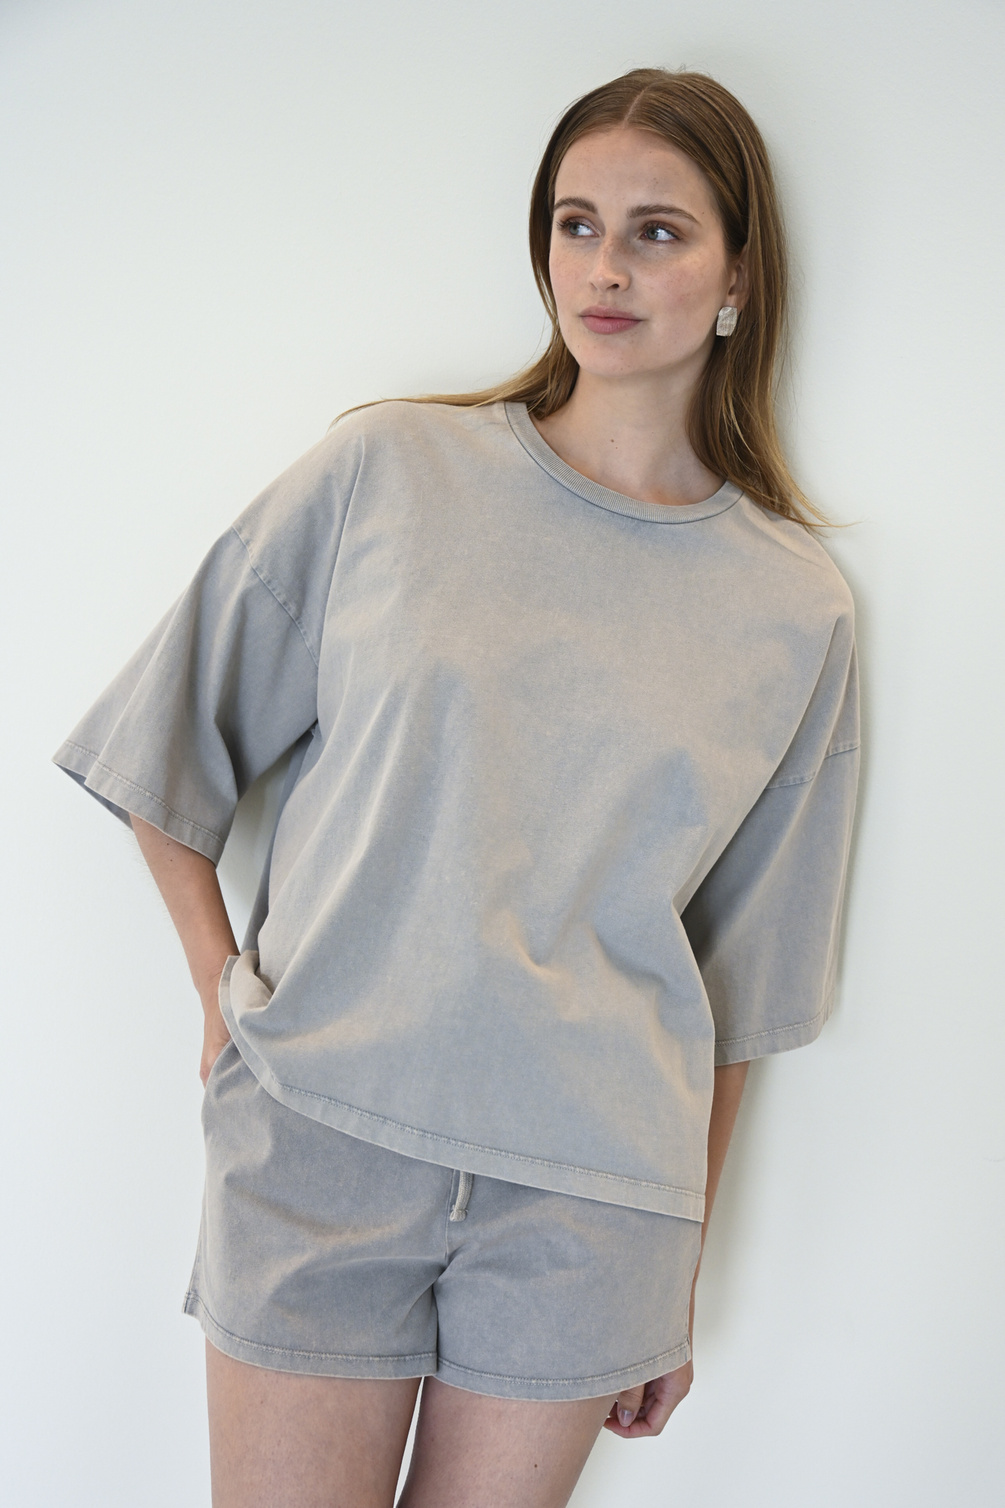 âme eloise t-shirt vintage grey